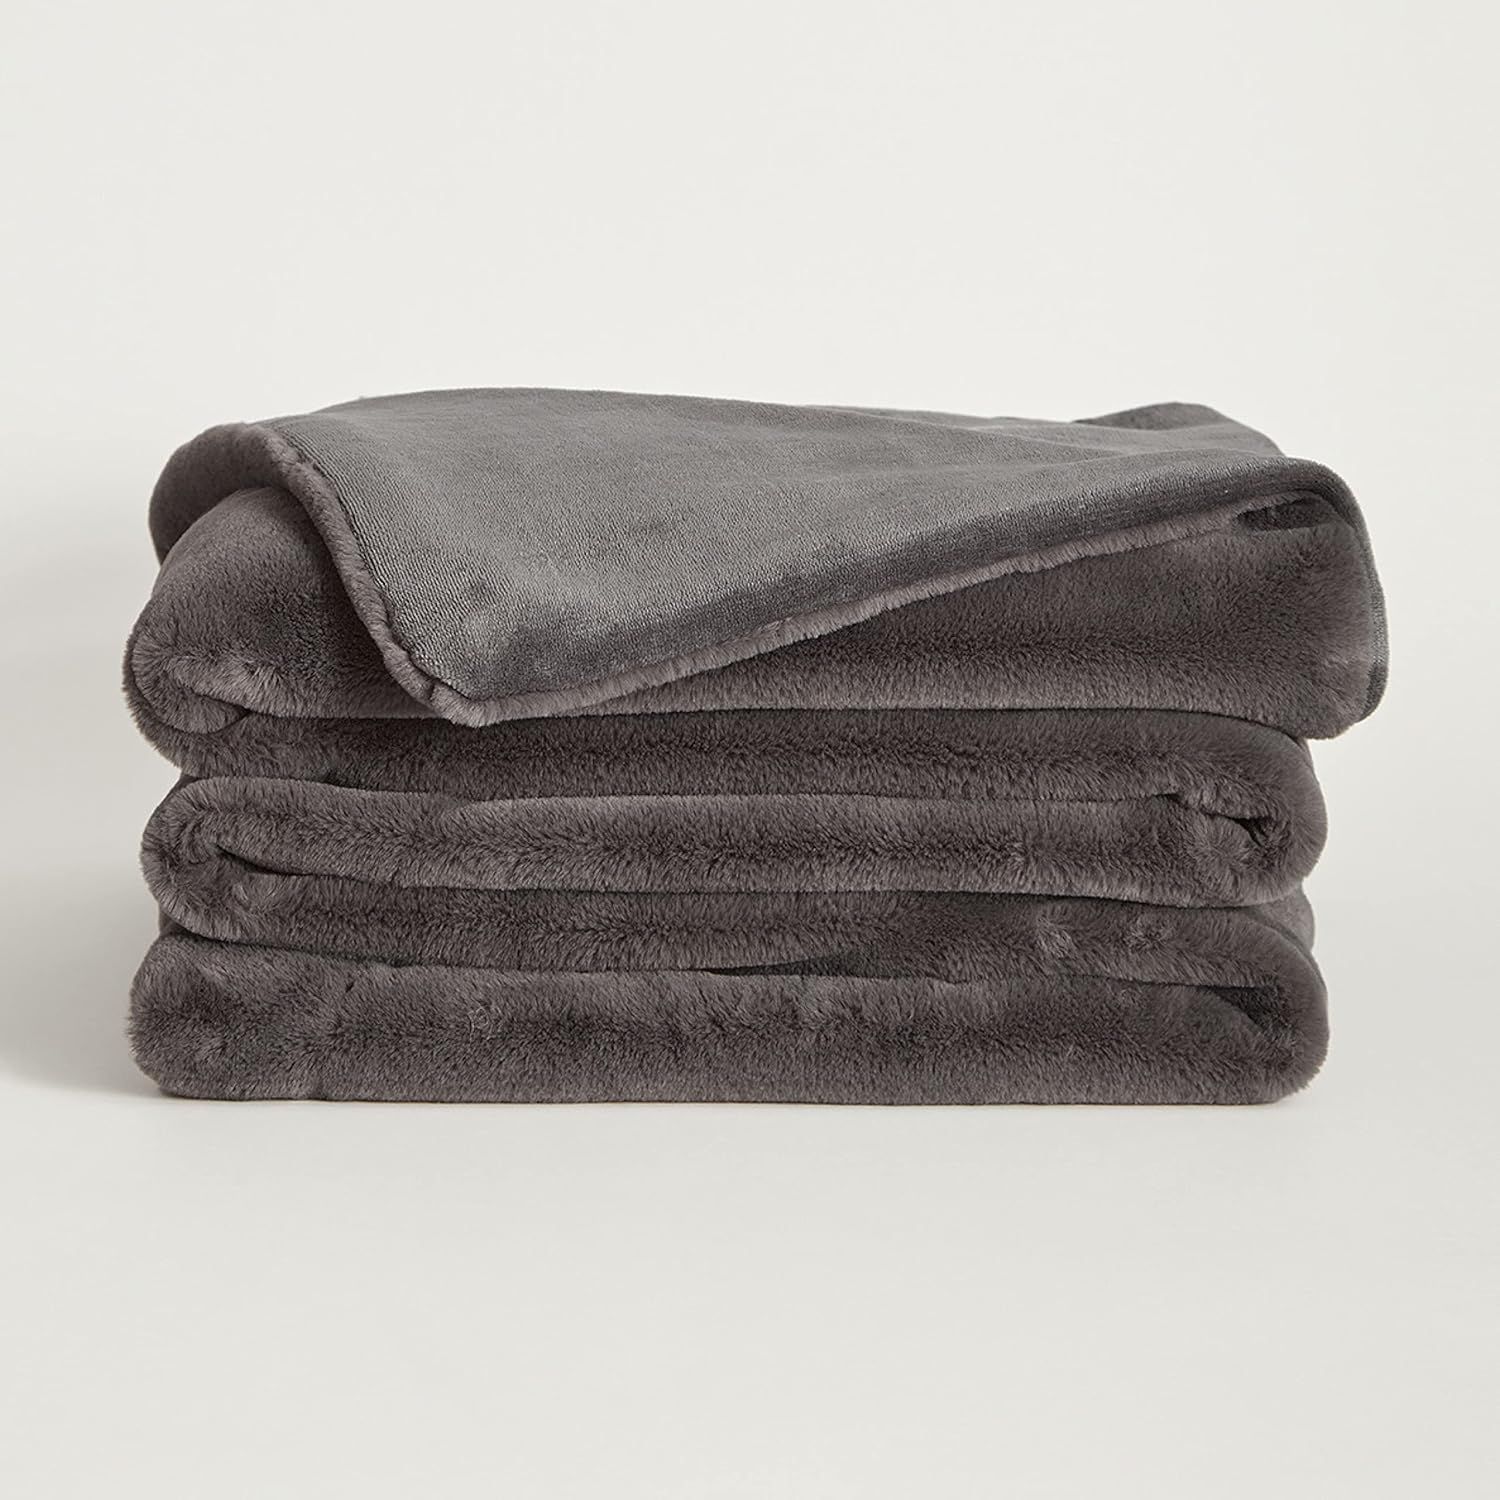 UnHide Lil’ Marsh - Faux Fur Blanket - Durable, Lightweight, Extra Soft Blanket - Machine Washa... | Amazon (US)